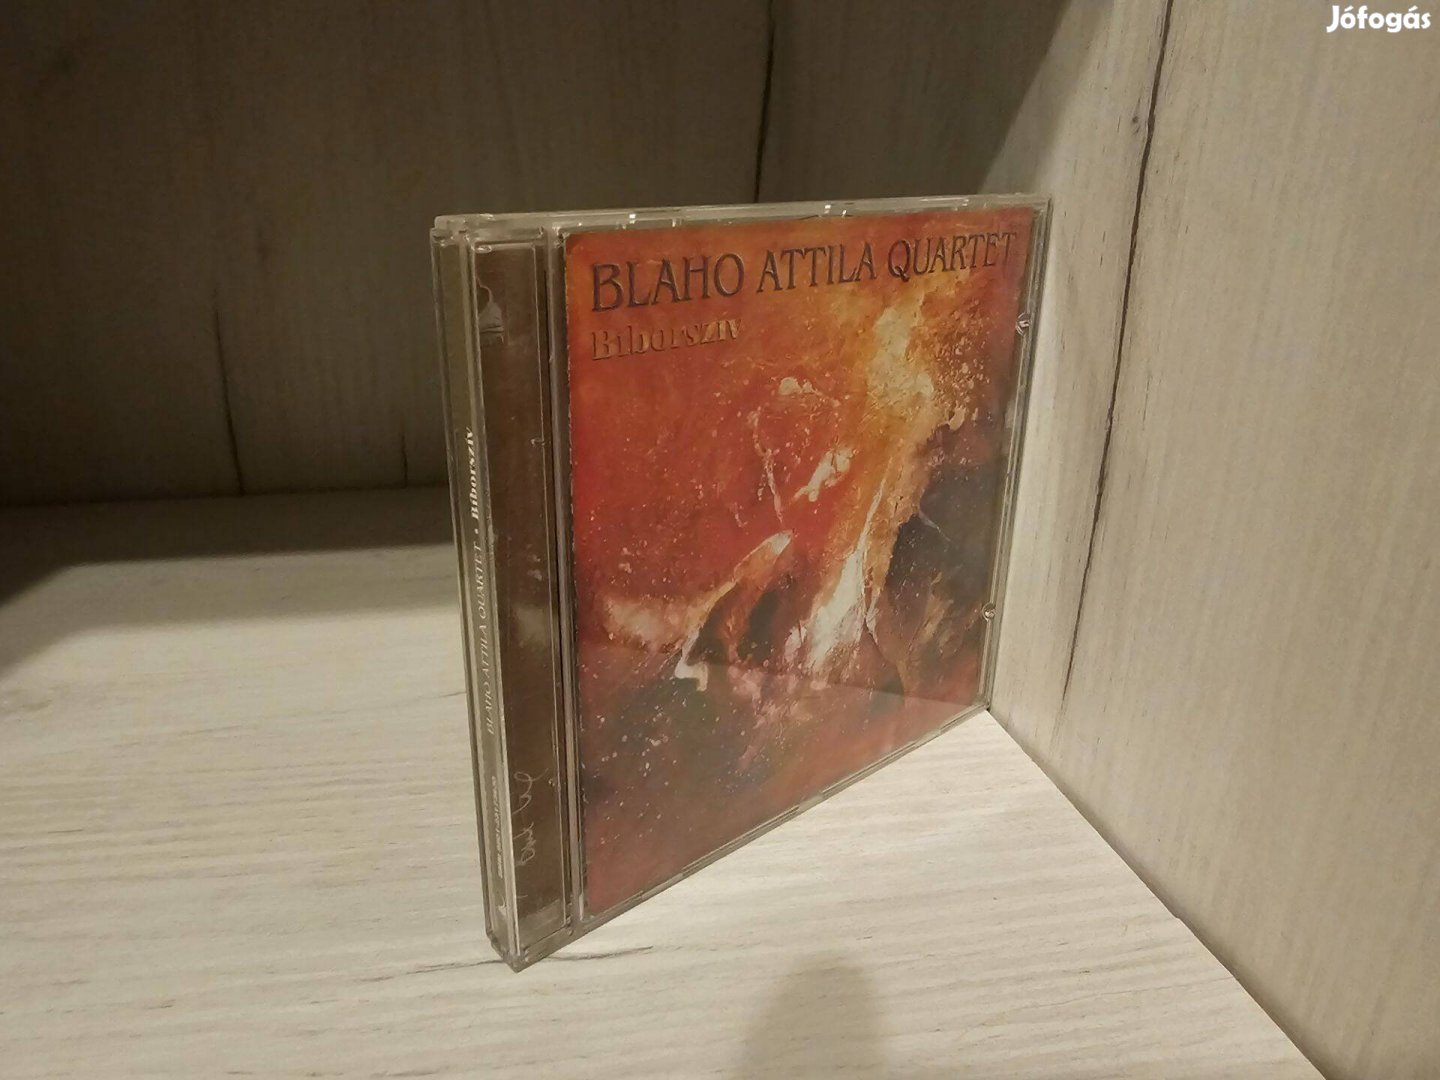 Blaho Attila Quartet Bíborszív CD